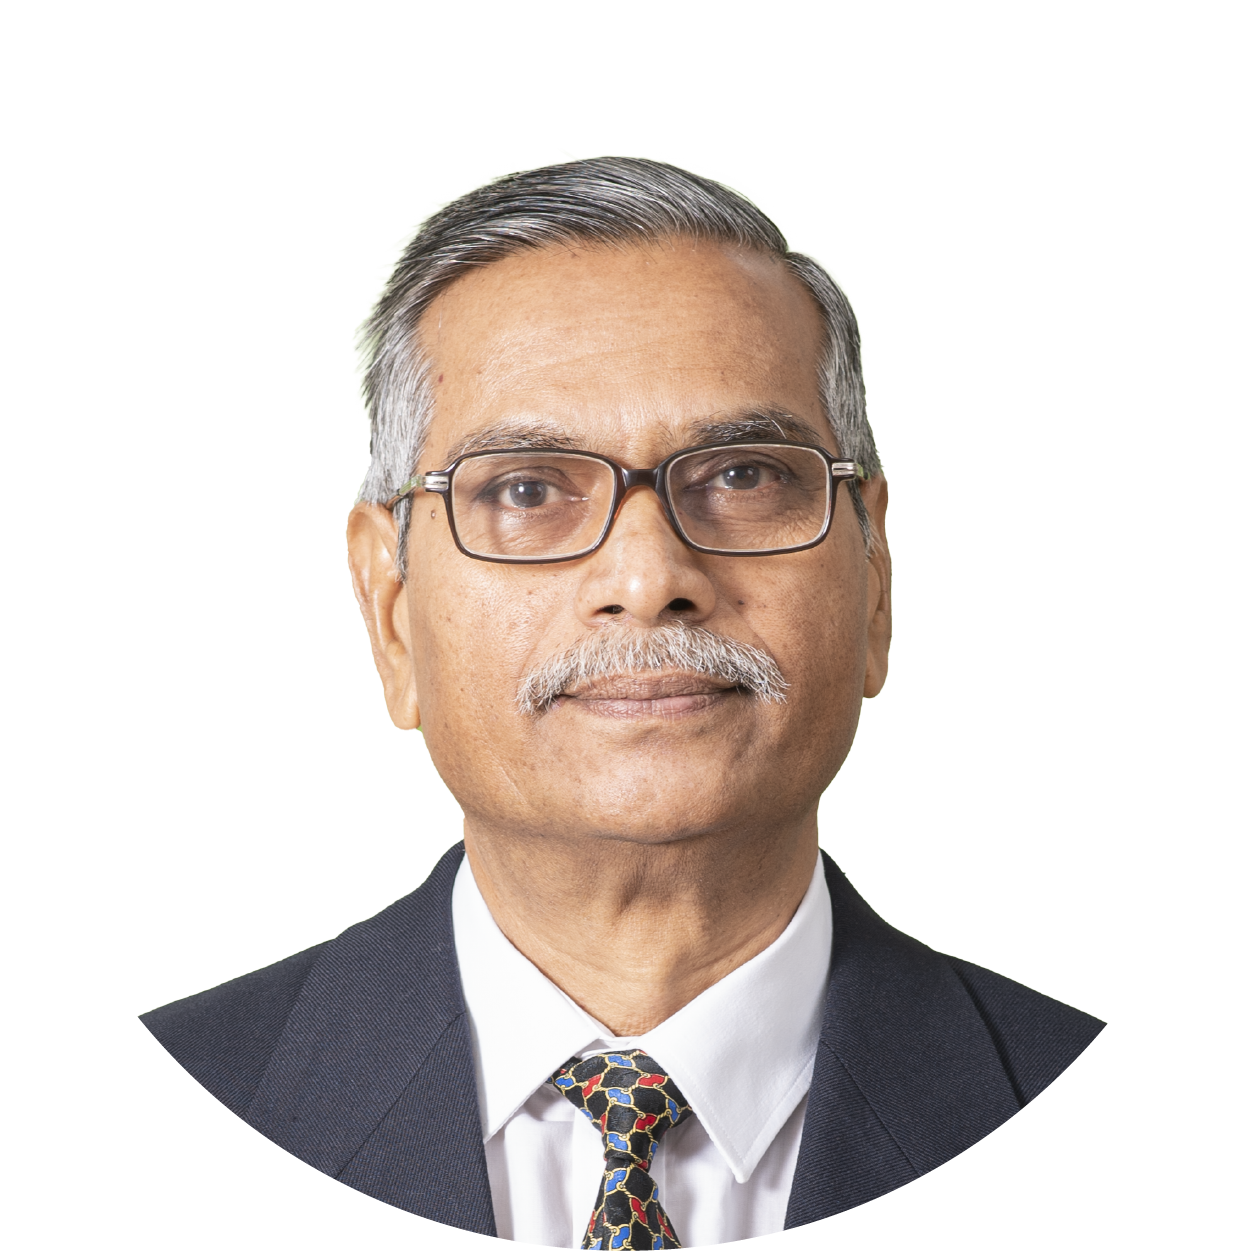 Dr. Machhindranath Koshti